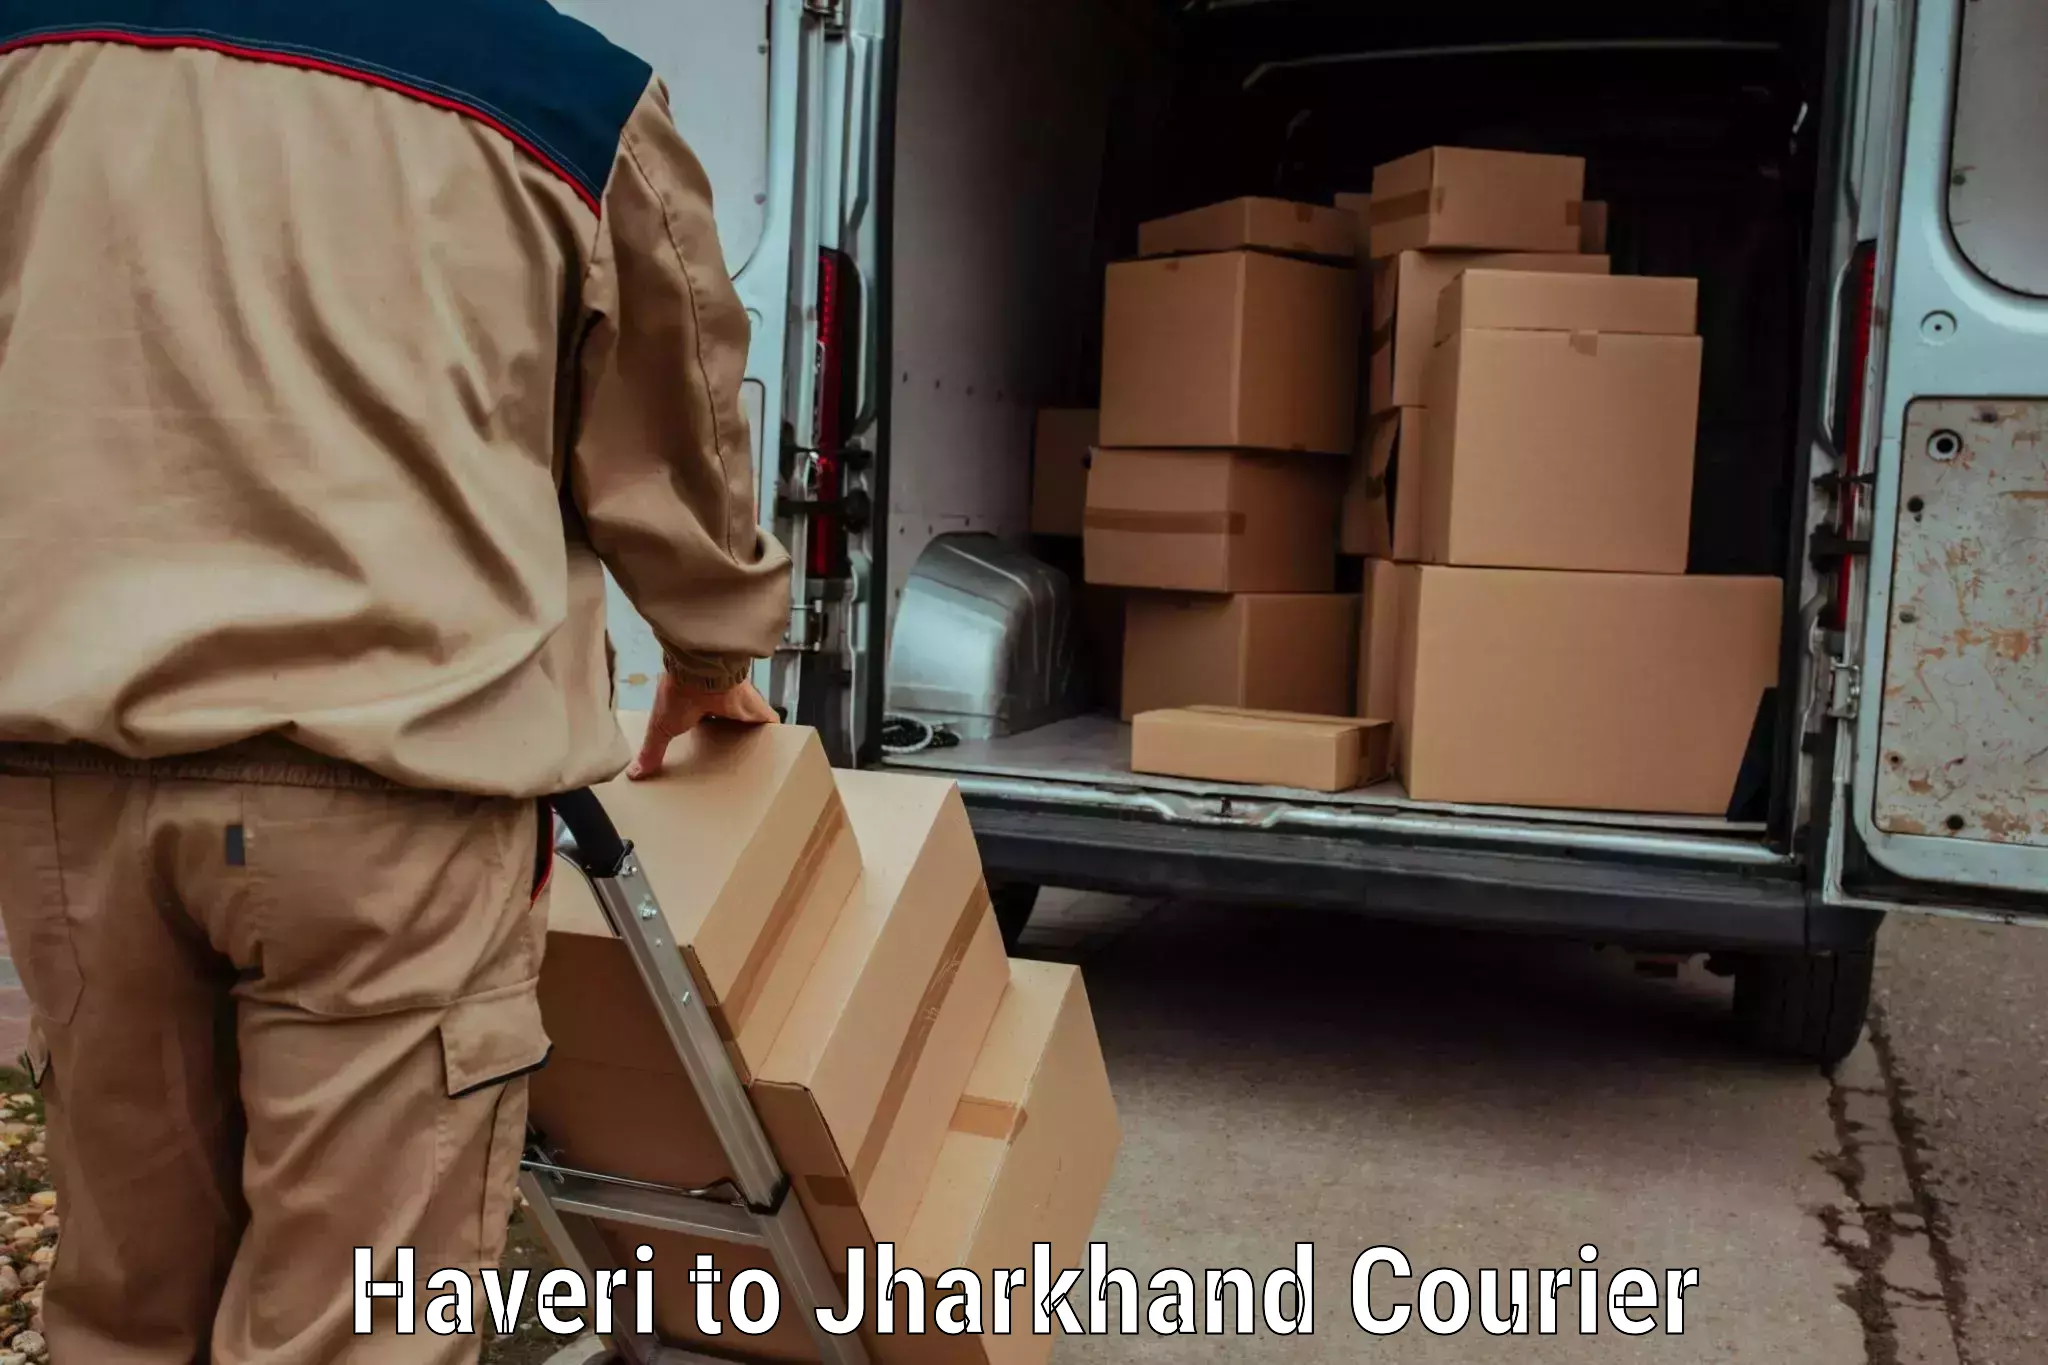 Urgent courier needs Haveri to Dhanbad